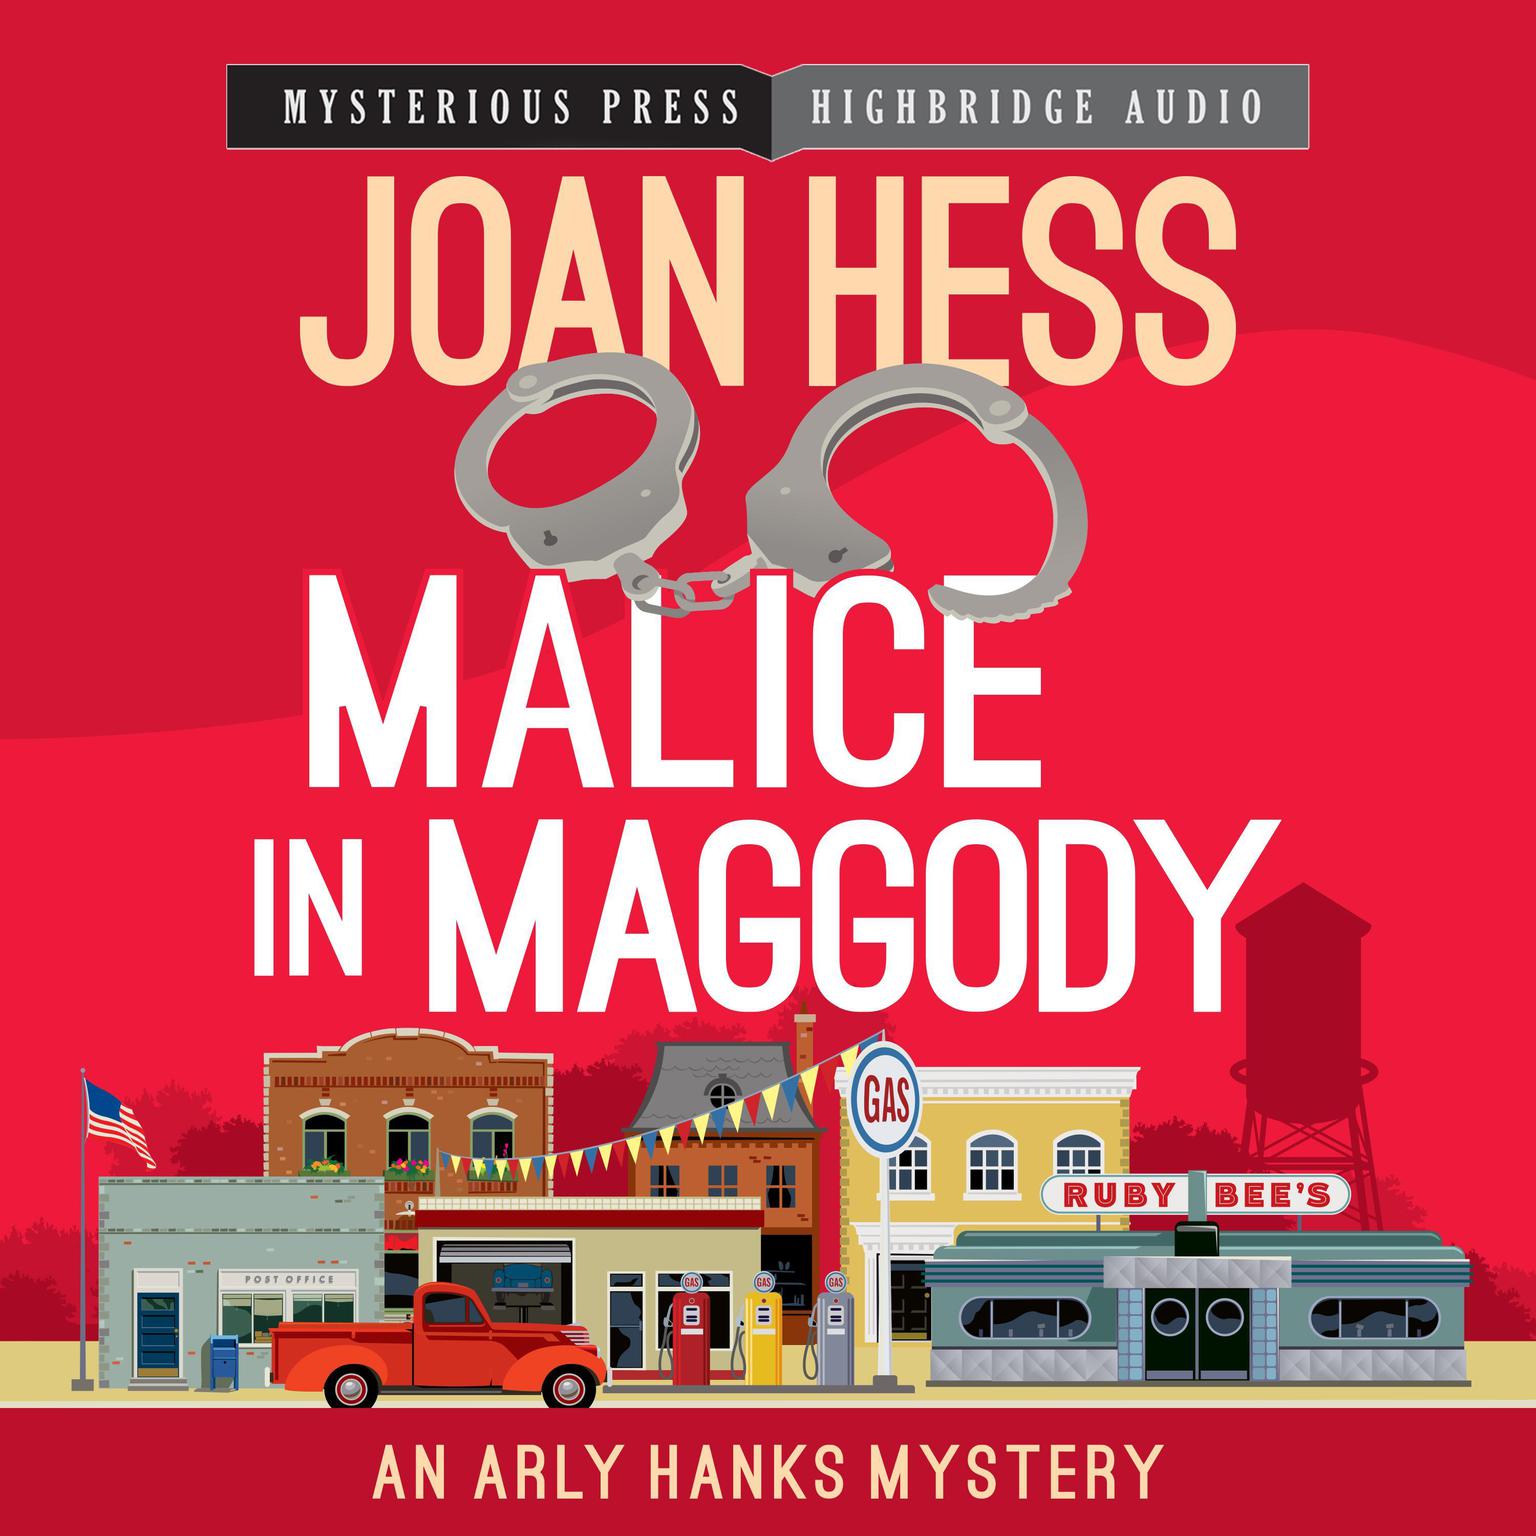 Malice in Maggody Audiobook, by Joan Hess